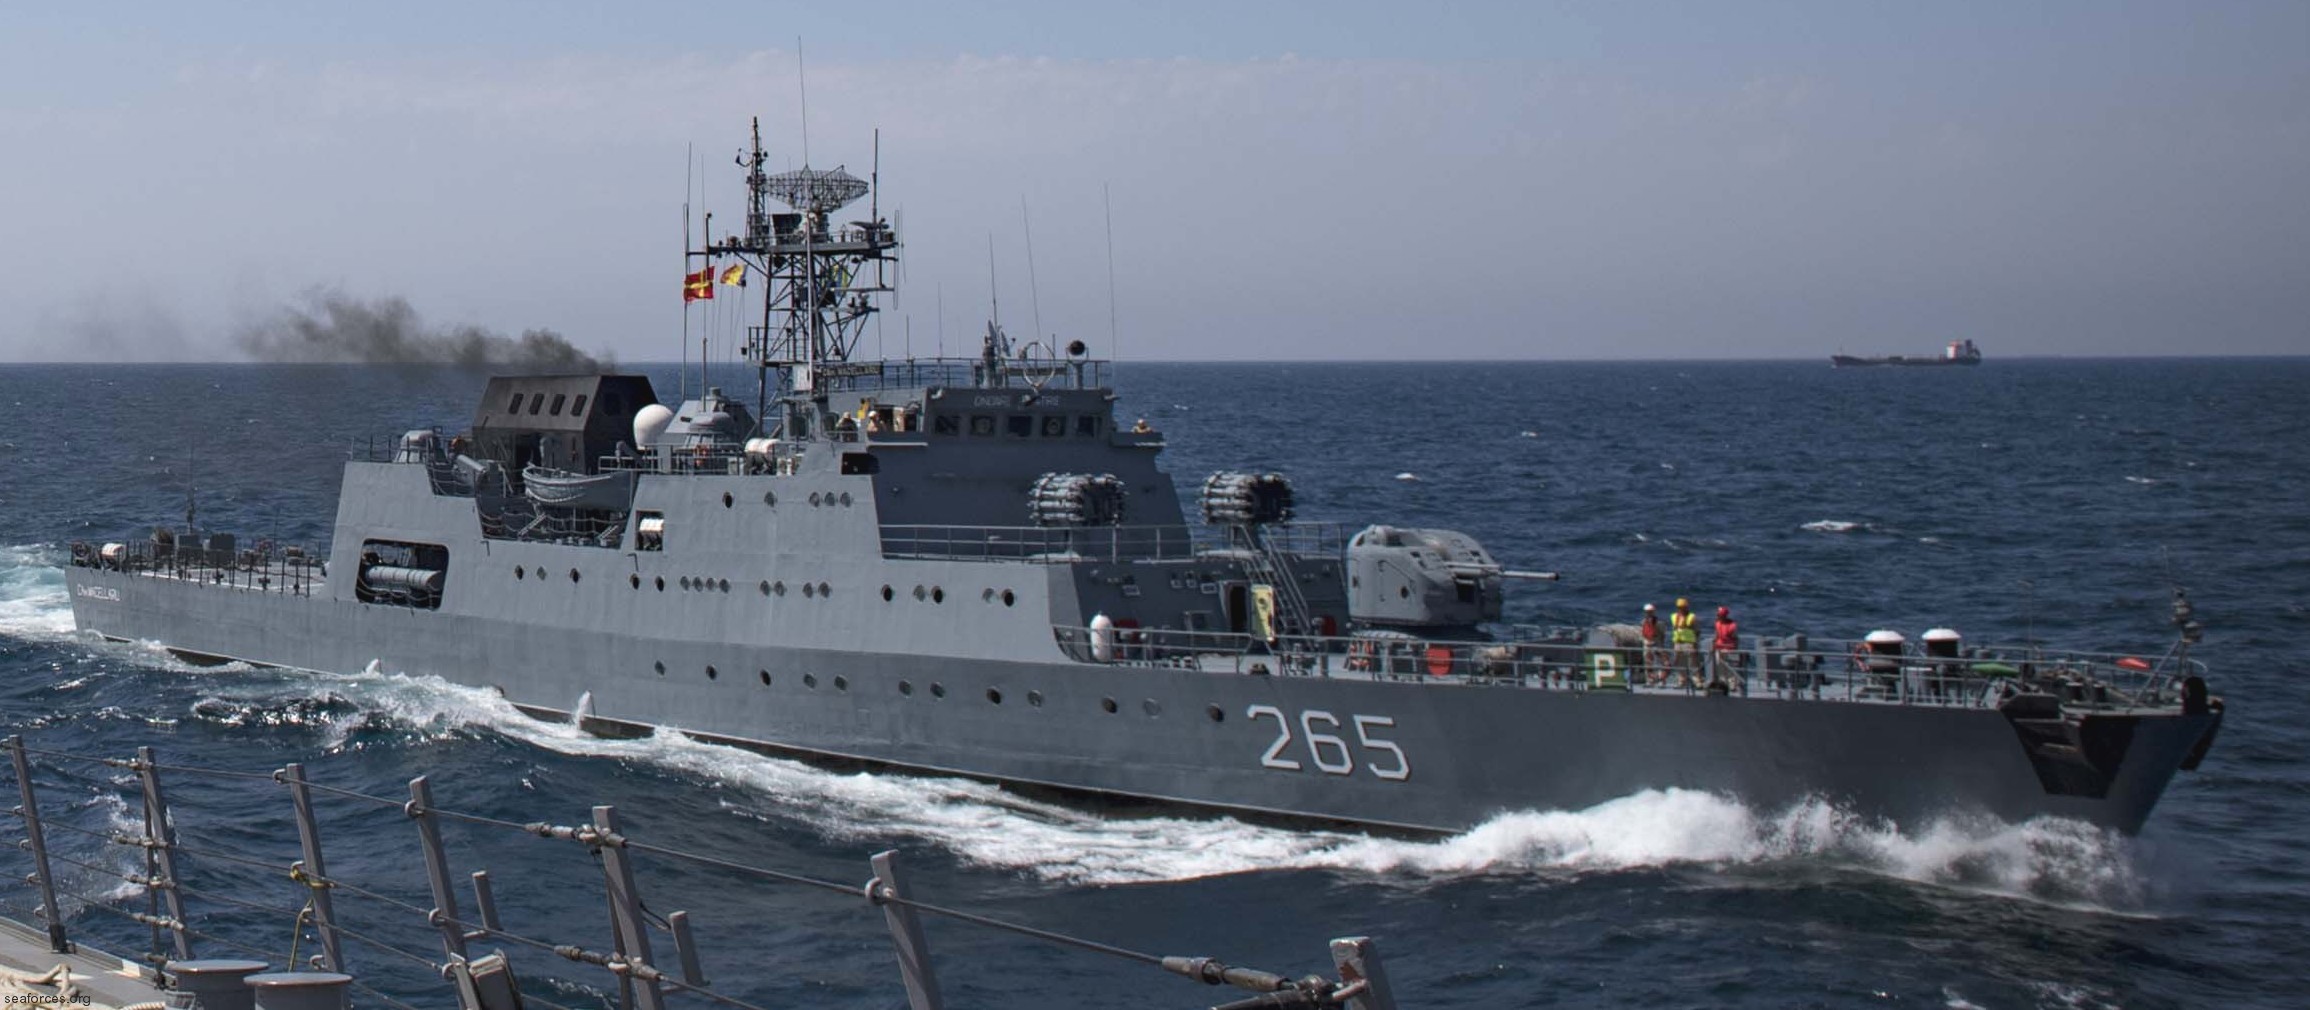 f-265 ros contraamiral horia macellariu tetal-ii class corvette romanian navy 06